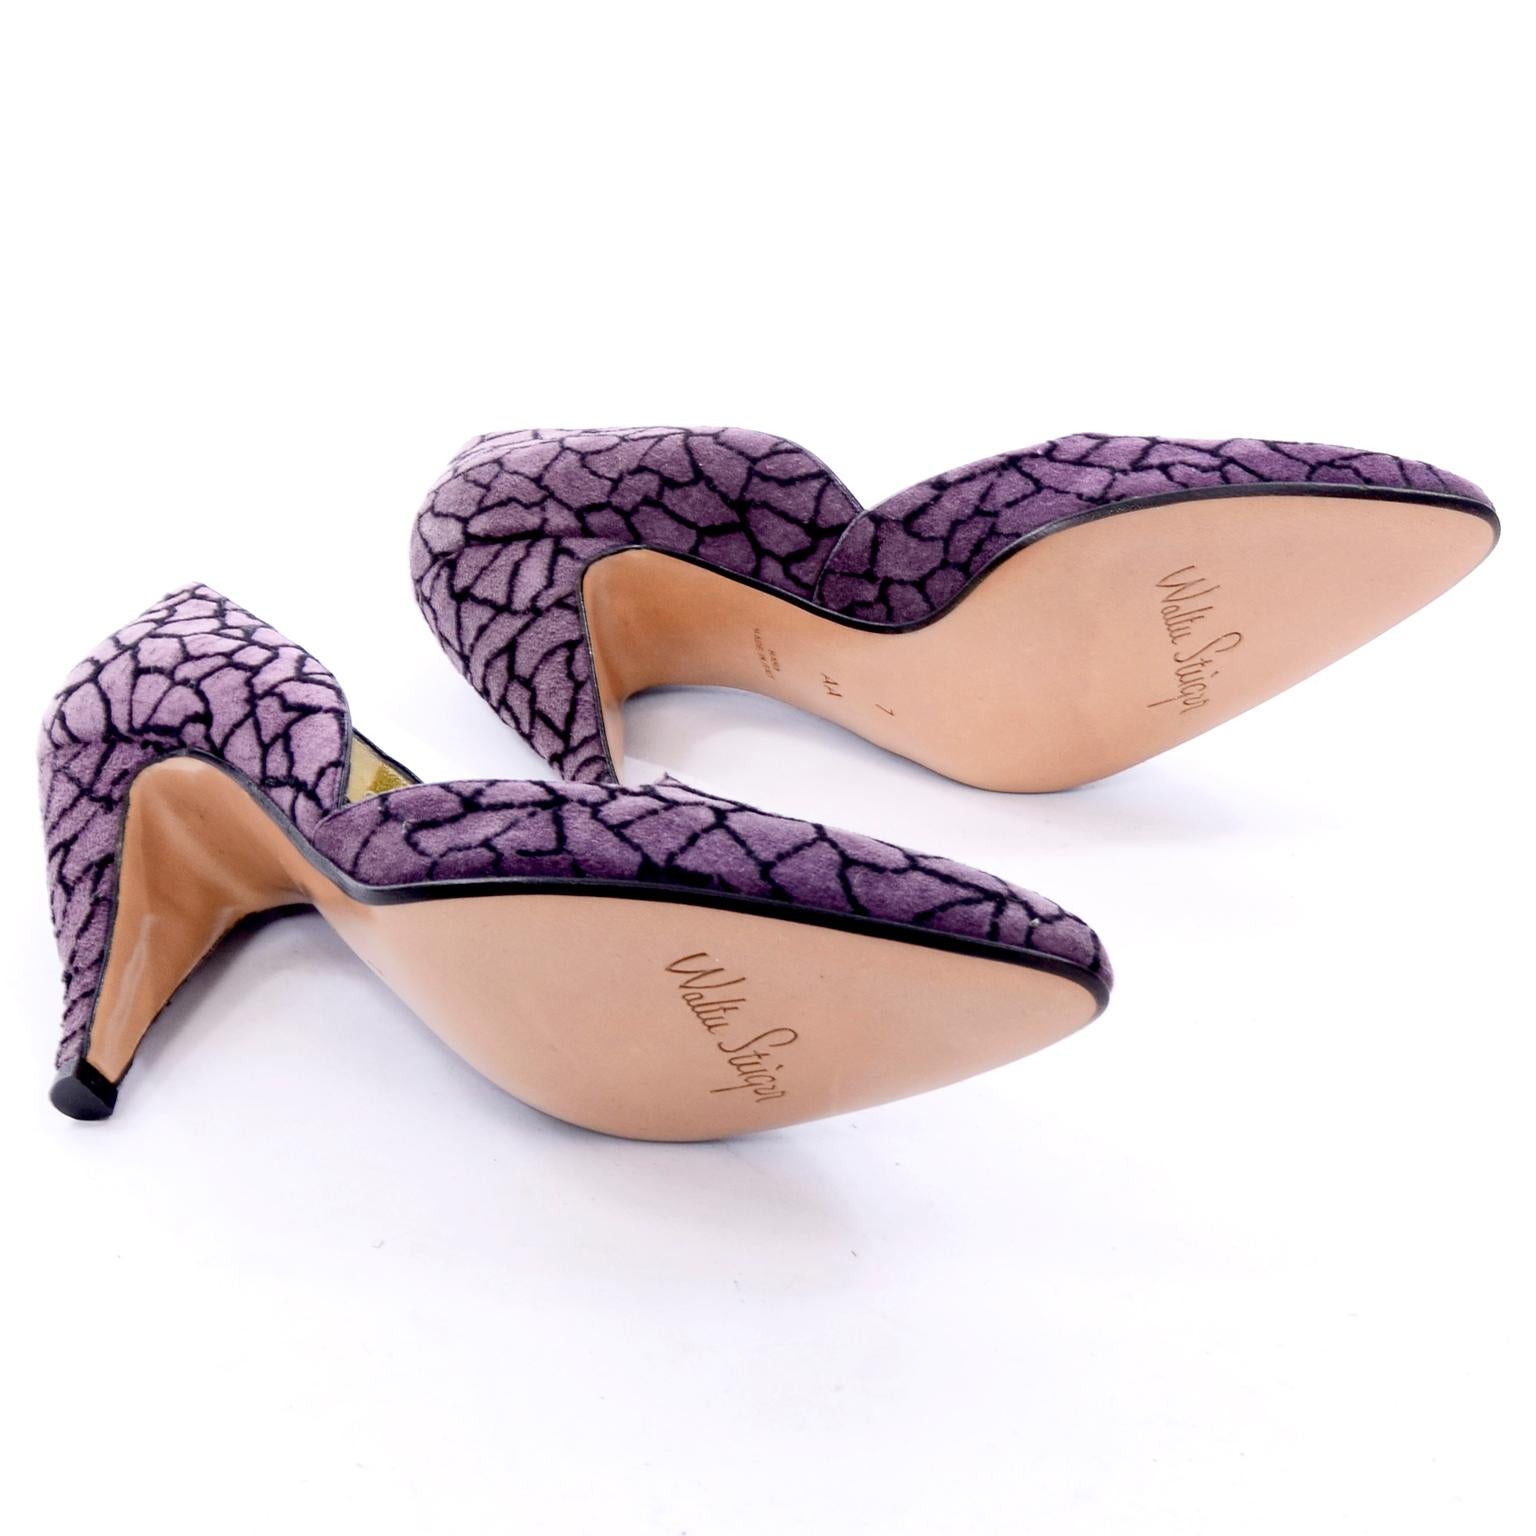 Women's Unworn Walter Steiger Vintage Shoes in Purple & Black Suede With 3.5